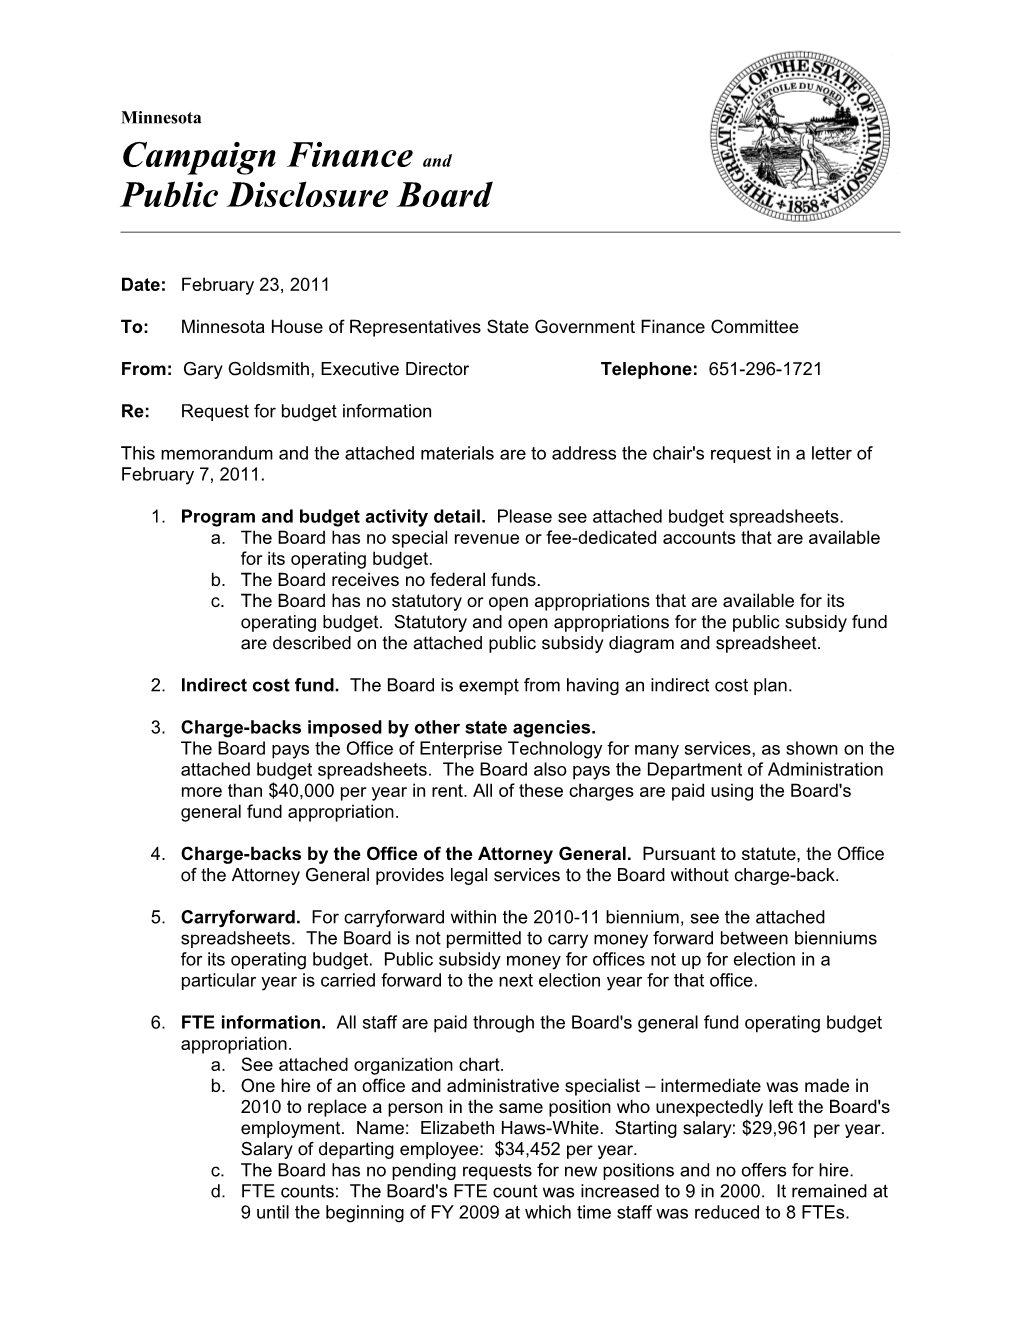 Public Disclosure Board